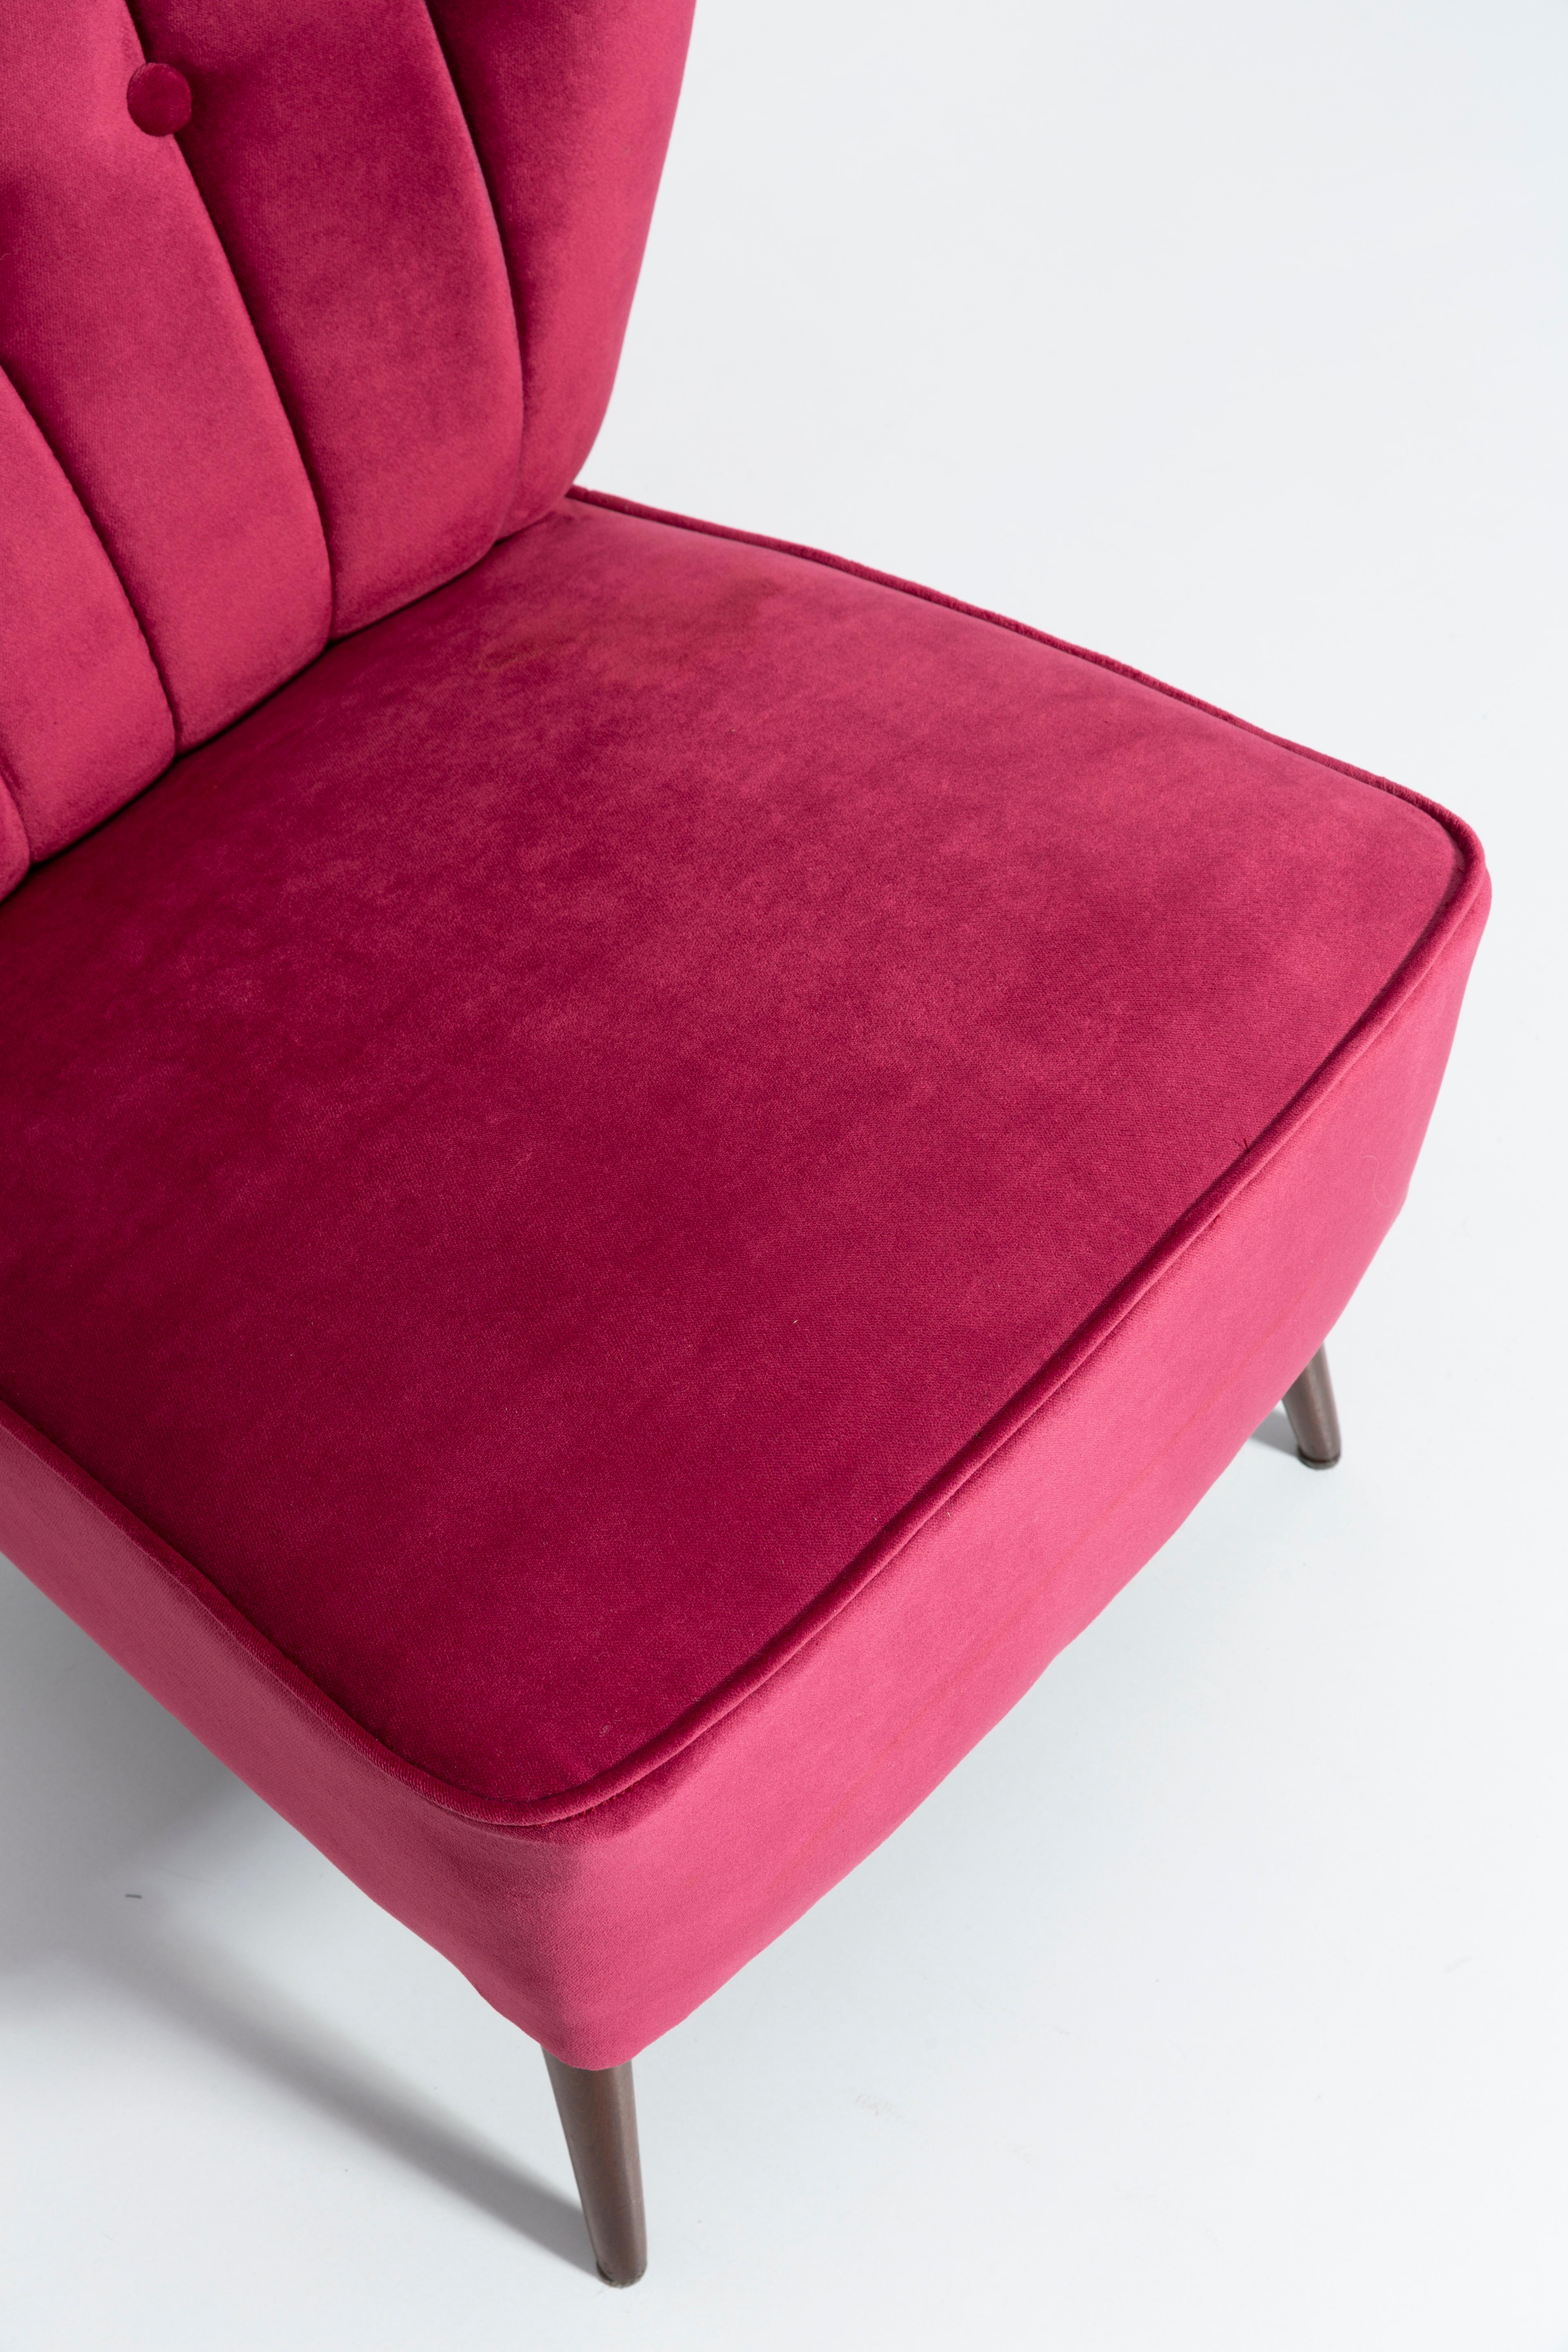 Midcentury Magenta Pink Velvet Club Armchair, Europe, 1960s For Sale 1